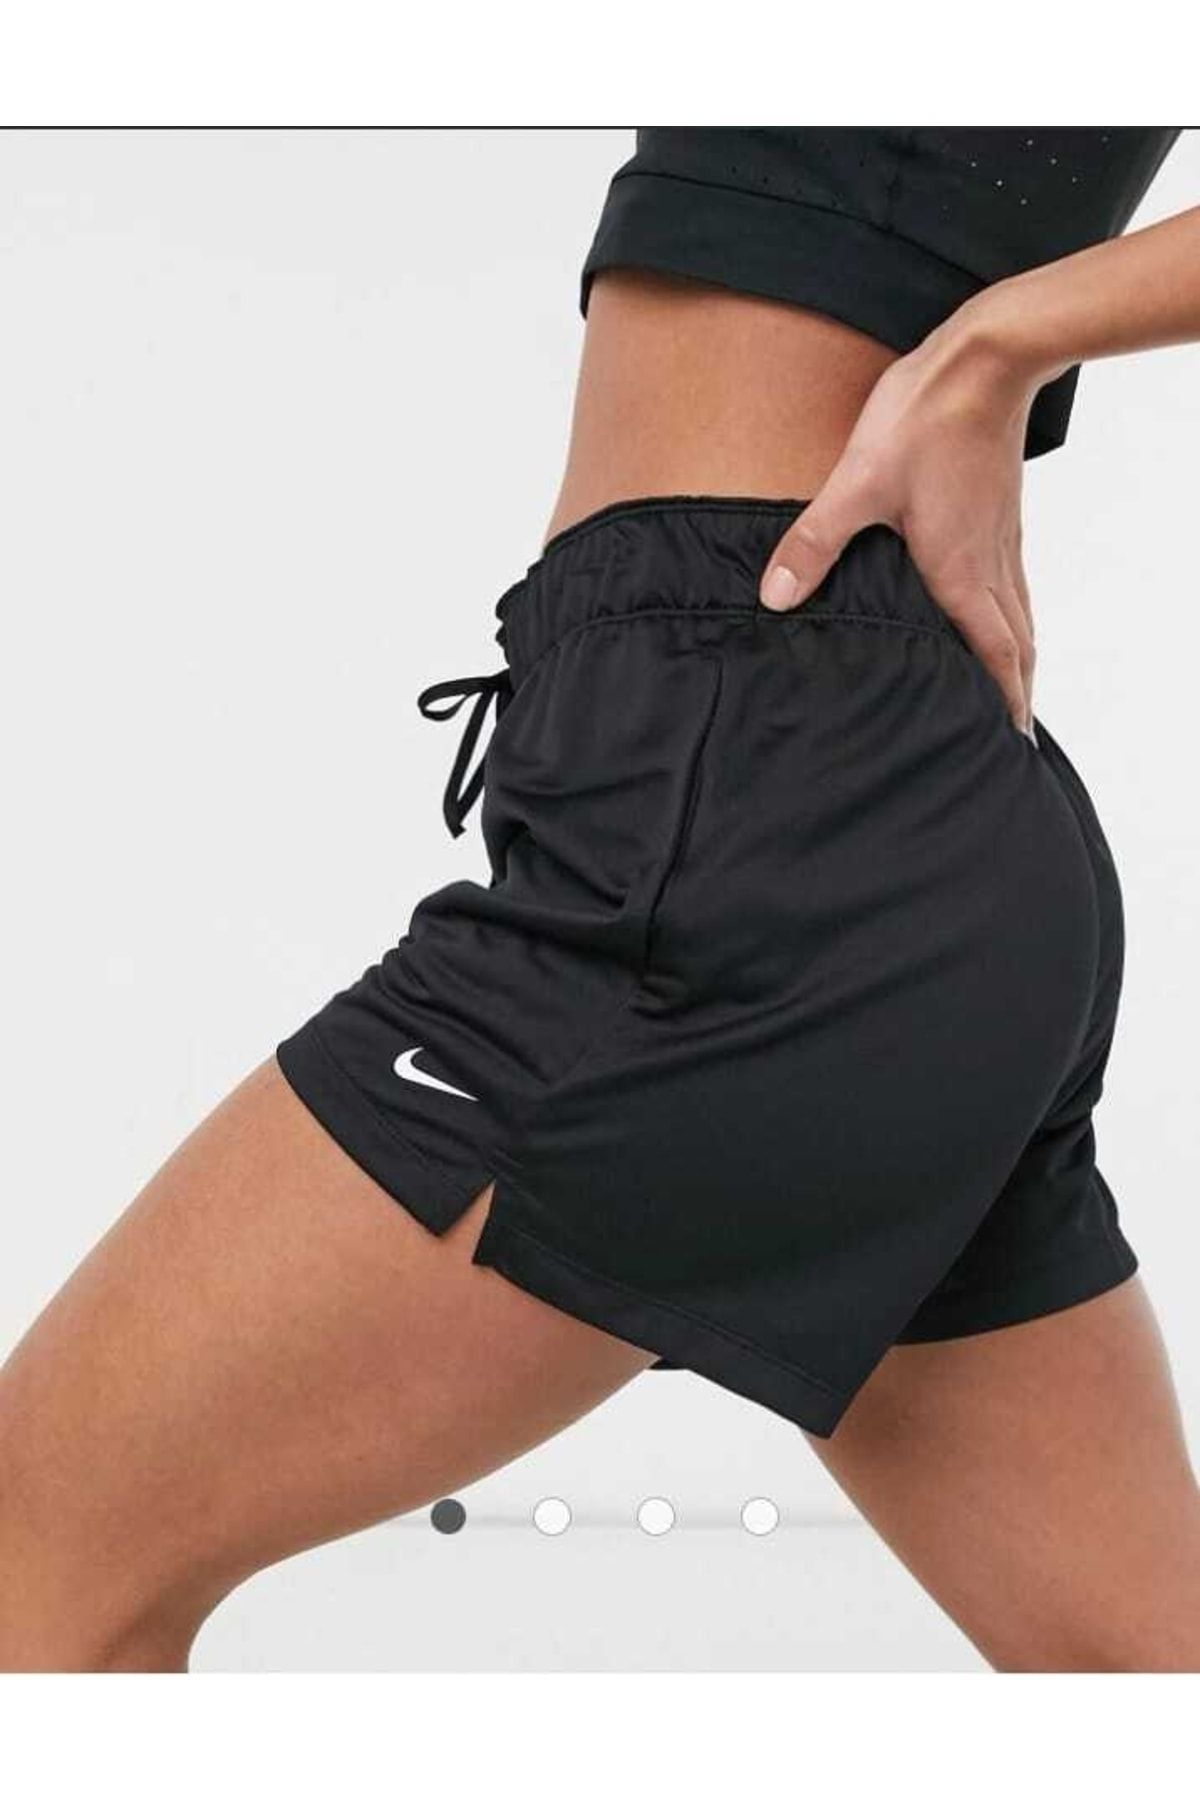 Nike Dri-fit Attack Shrt Kadın Siyah Antrenman Şortu Cng-store®